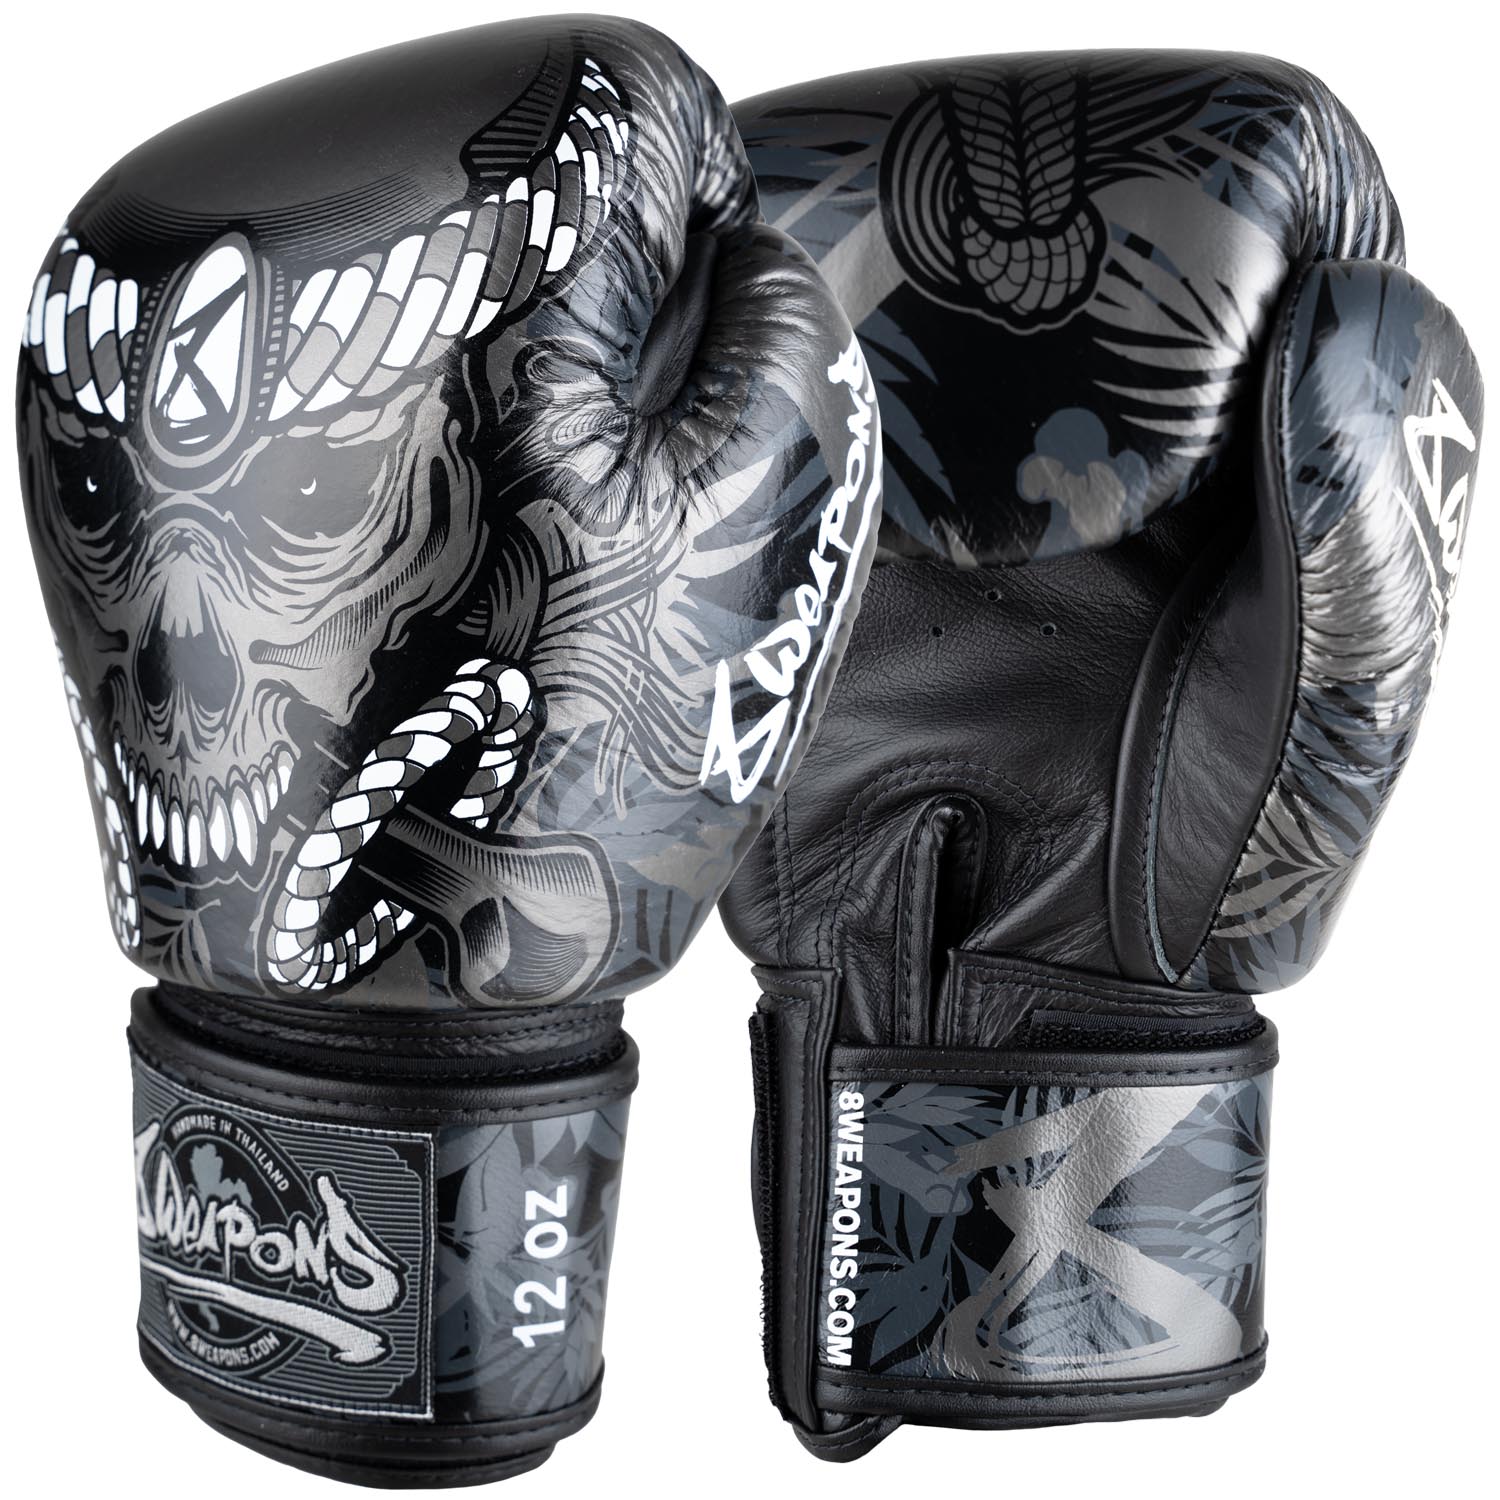 8 WEAPONS Boxing Gloves, Bone Island, black, 12 Oz